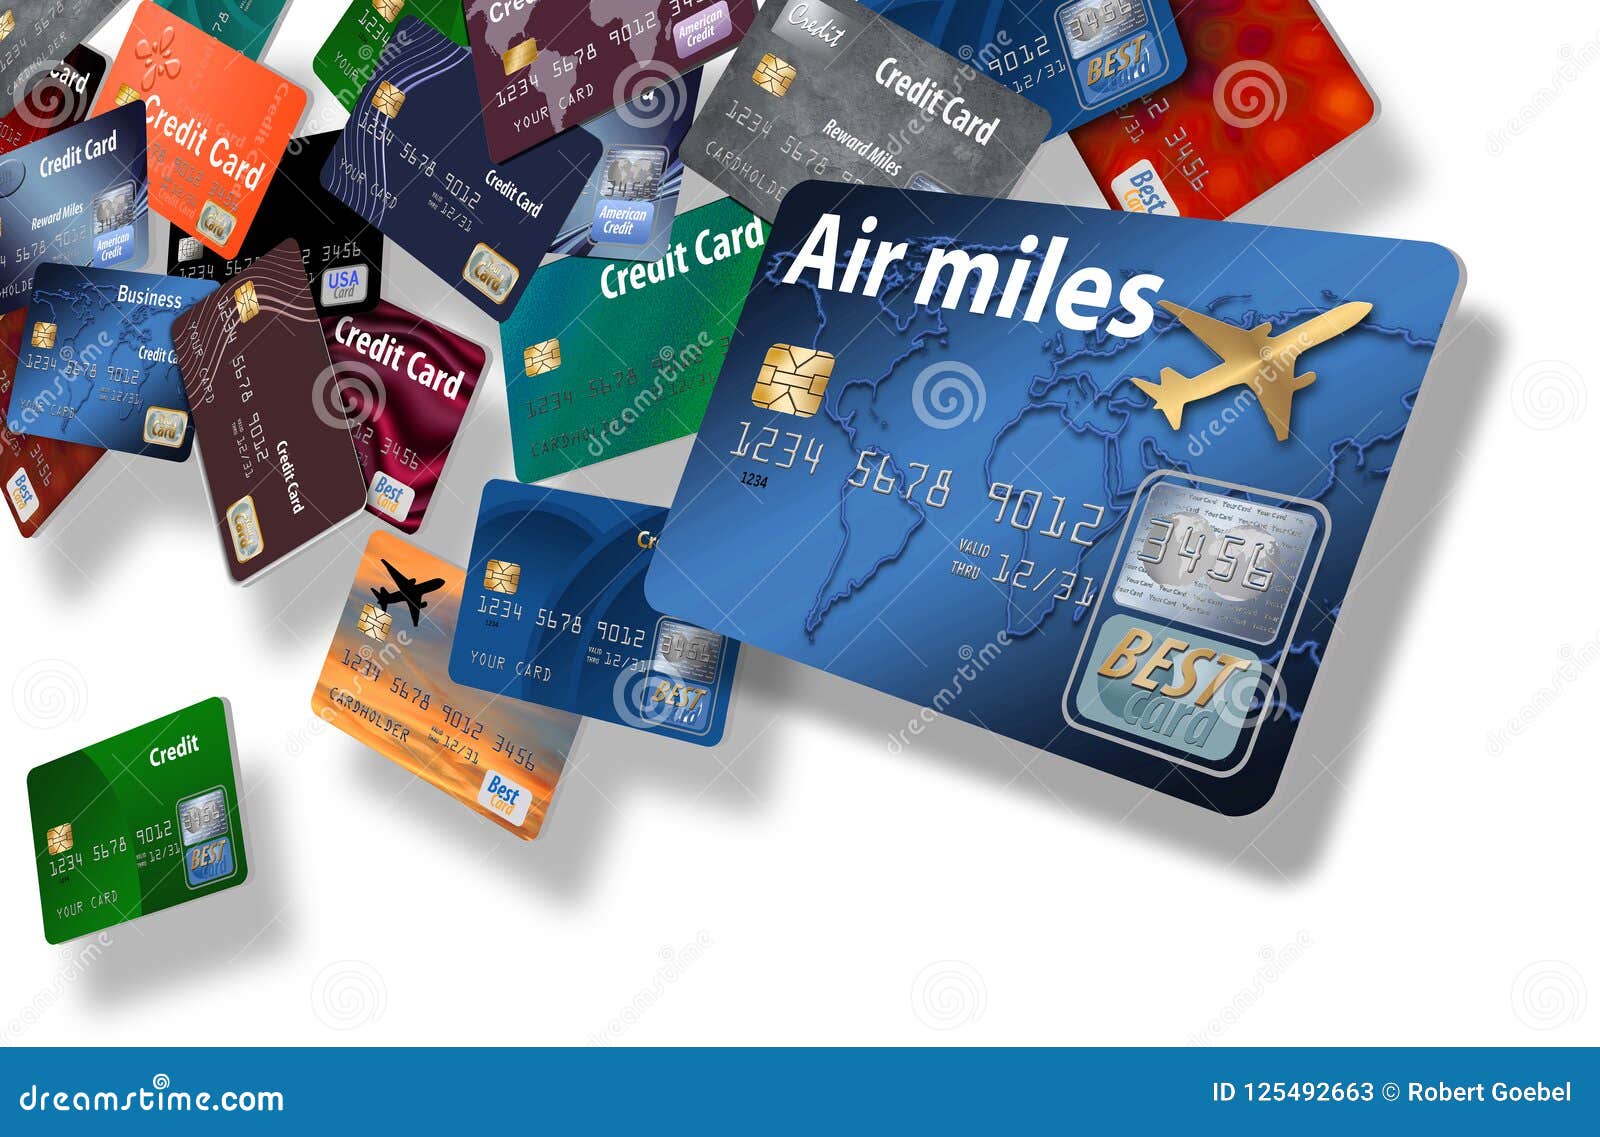 flight rewards credit cards